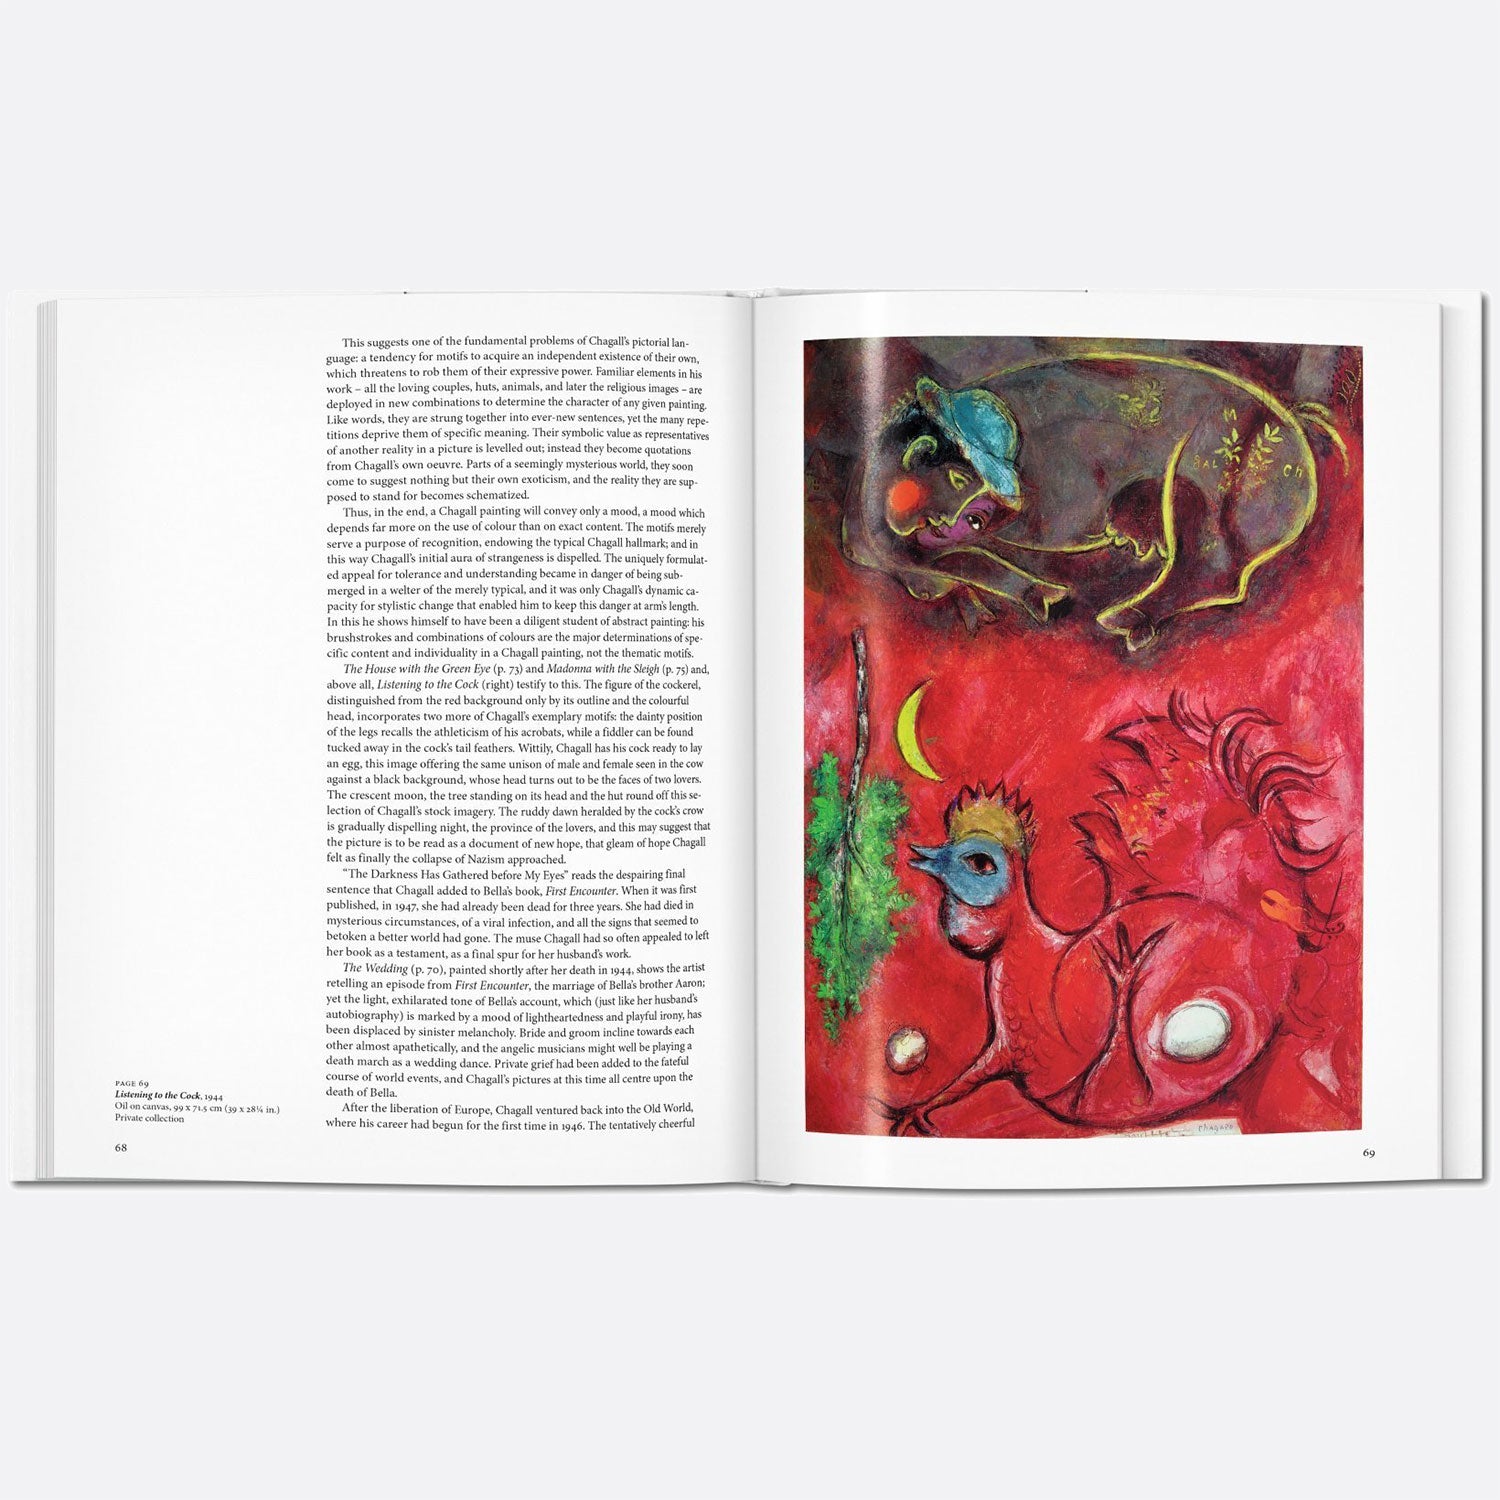 chagall taschen literature art book